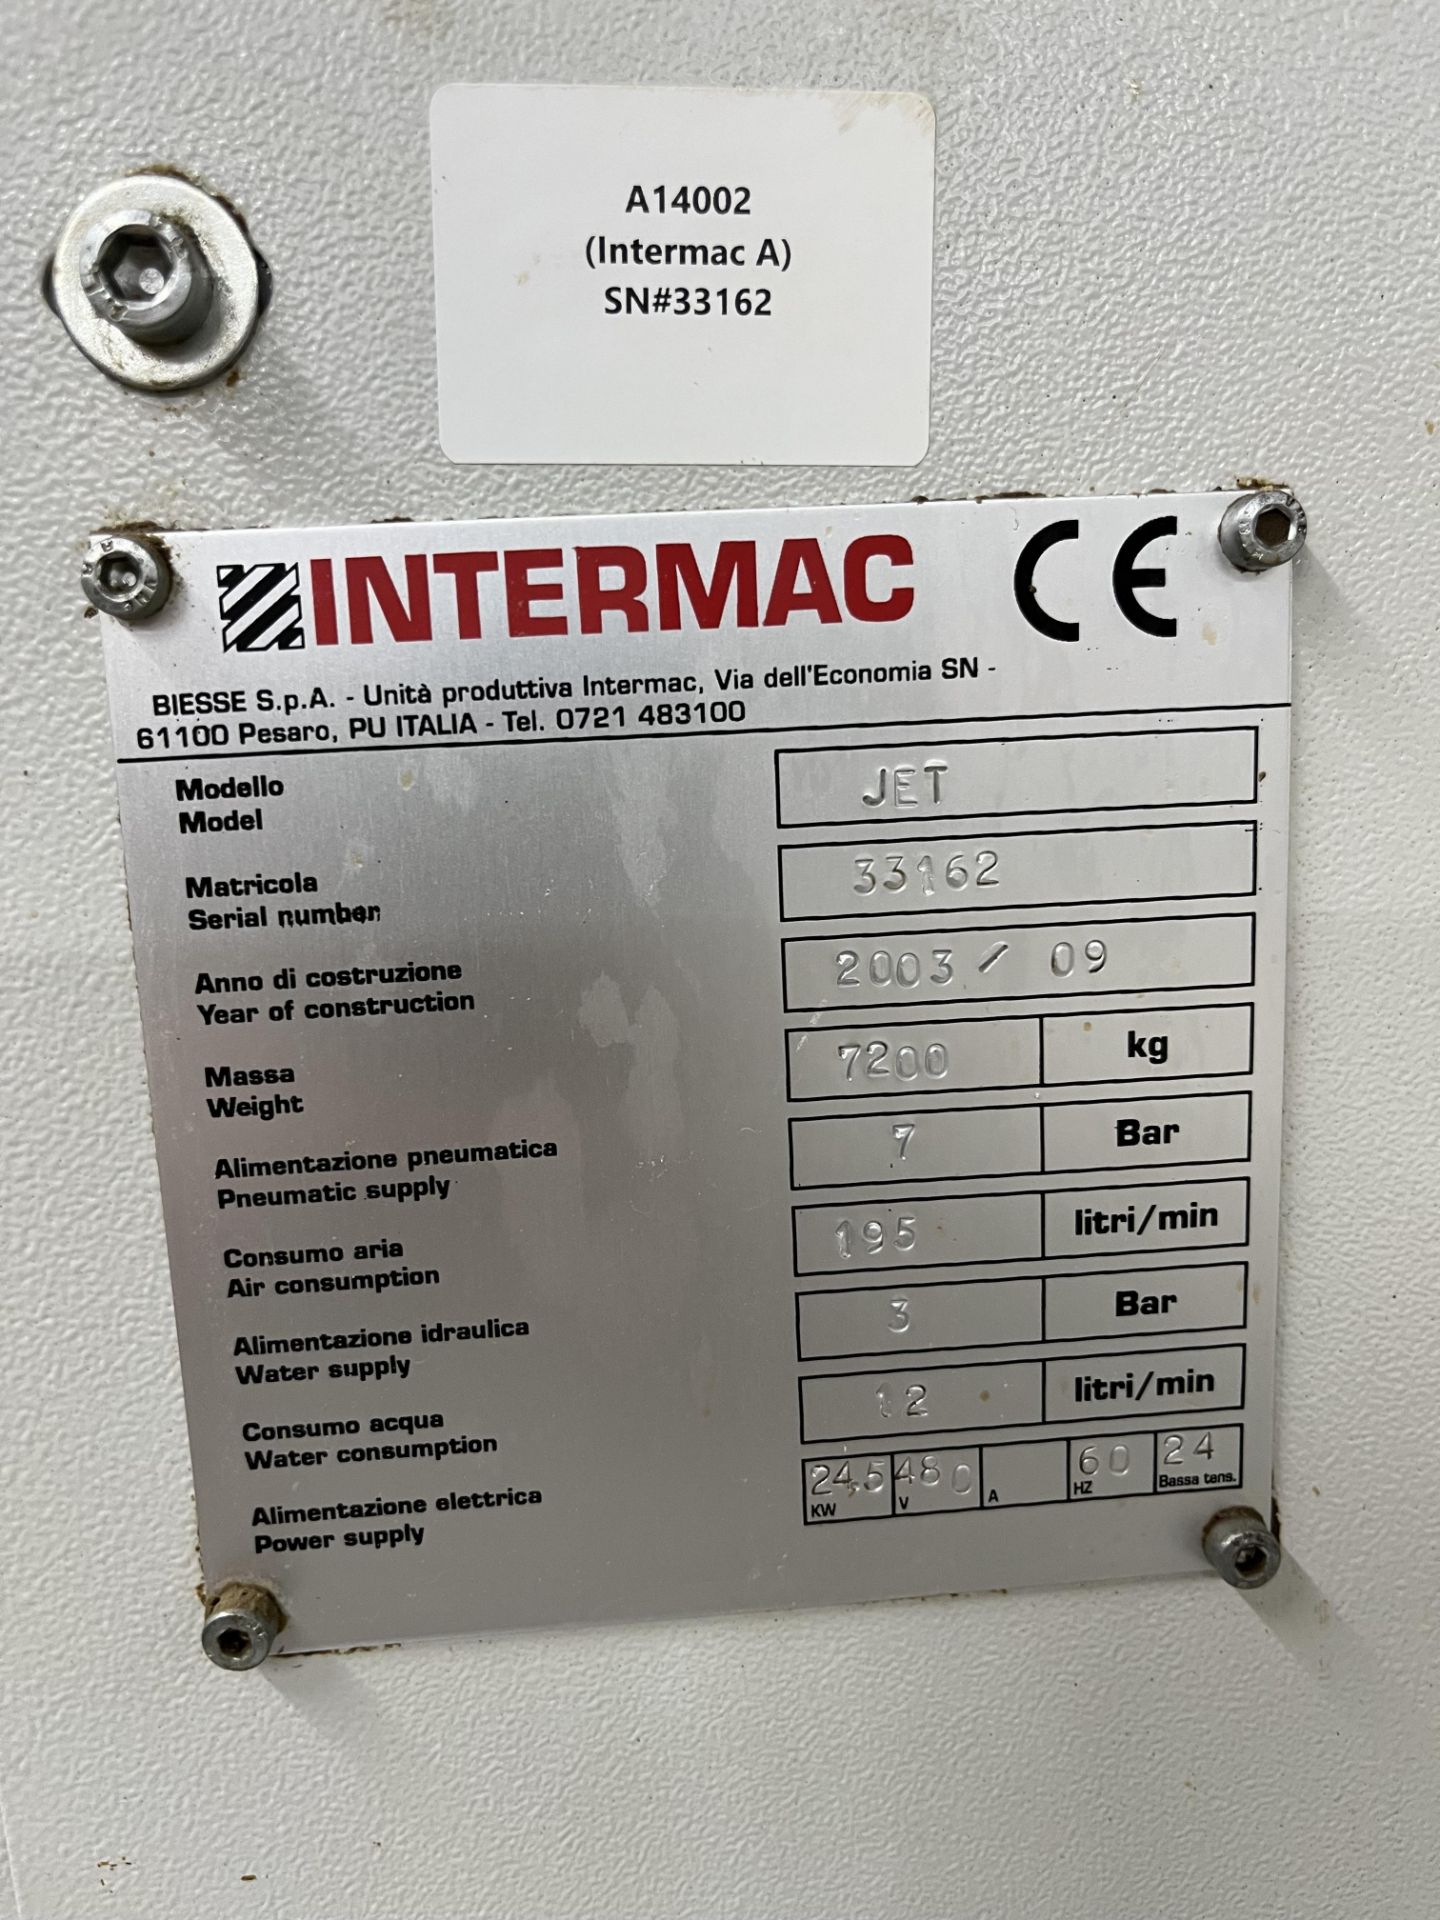 INTERMAC JET WATERJET CNC CUTTING MACHINE. S/N 33162, 480V - Image 6 of 9